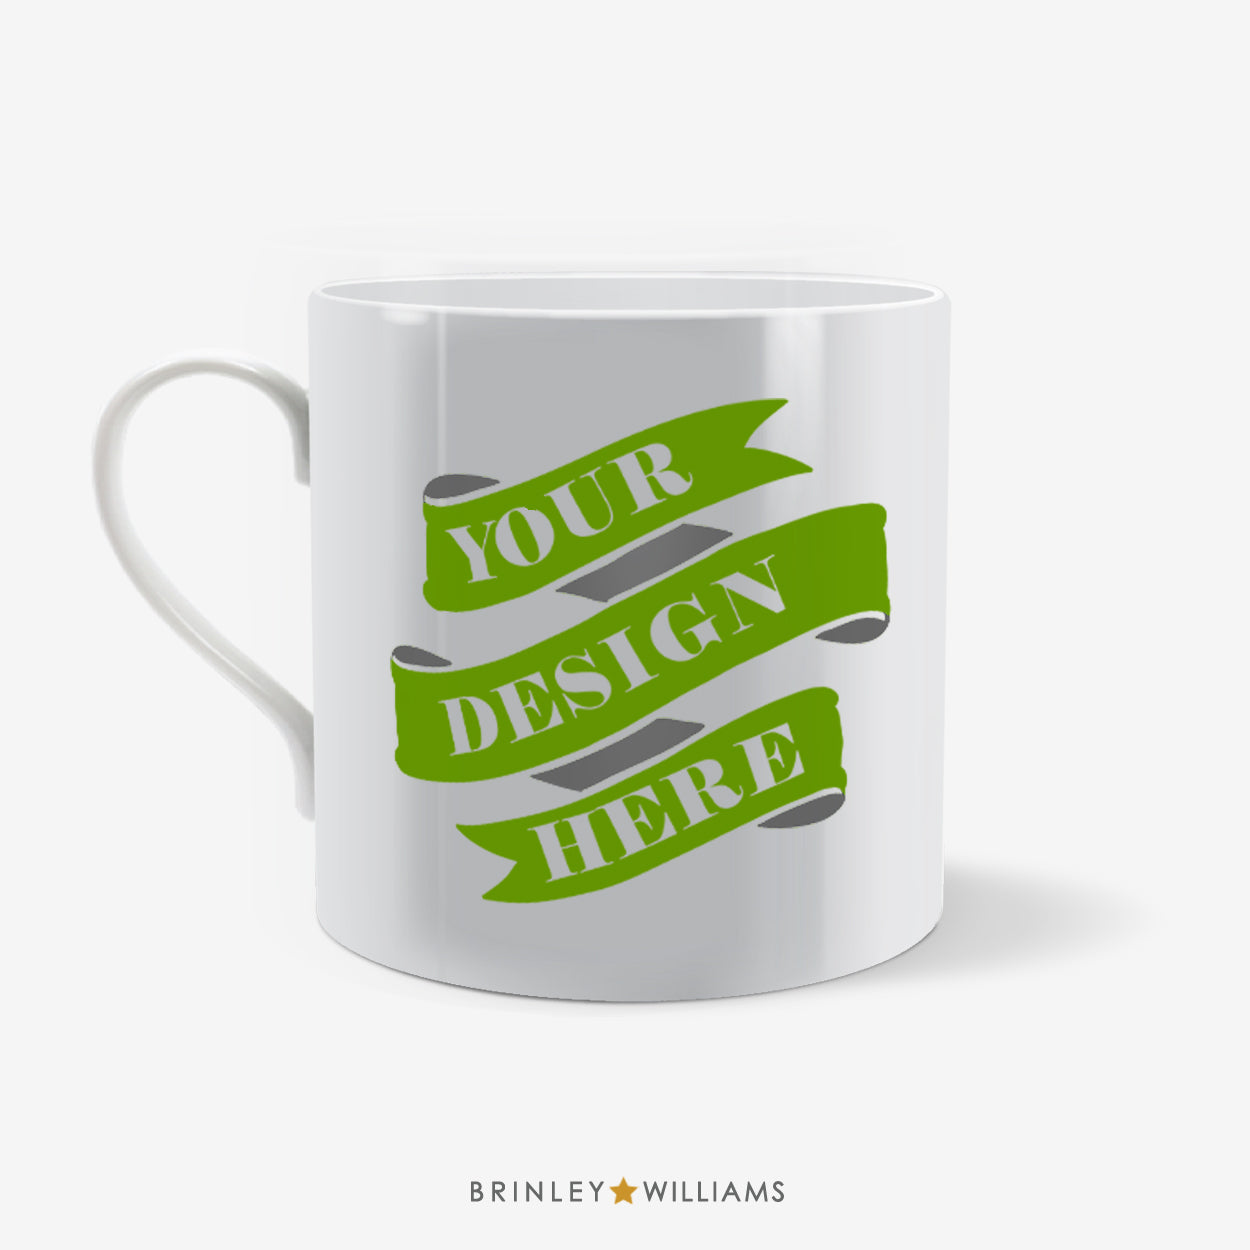 Small Bone China  - Design your own Mug - side 2